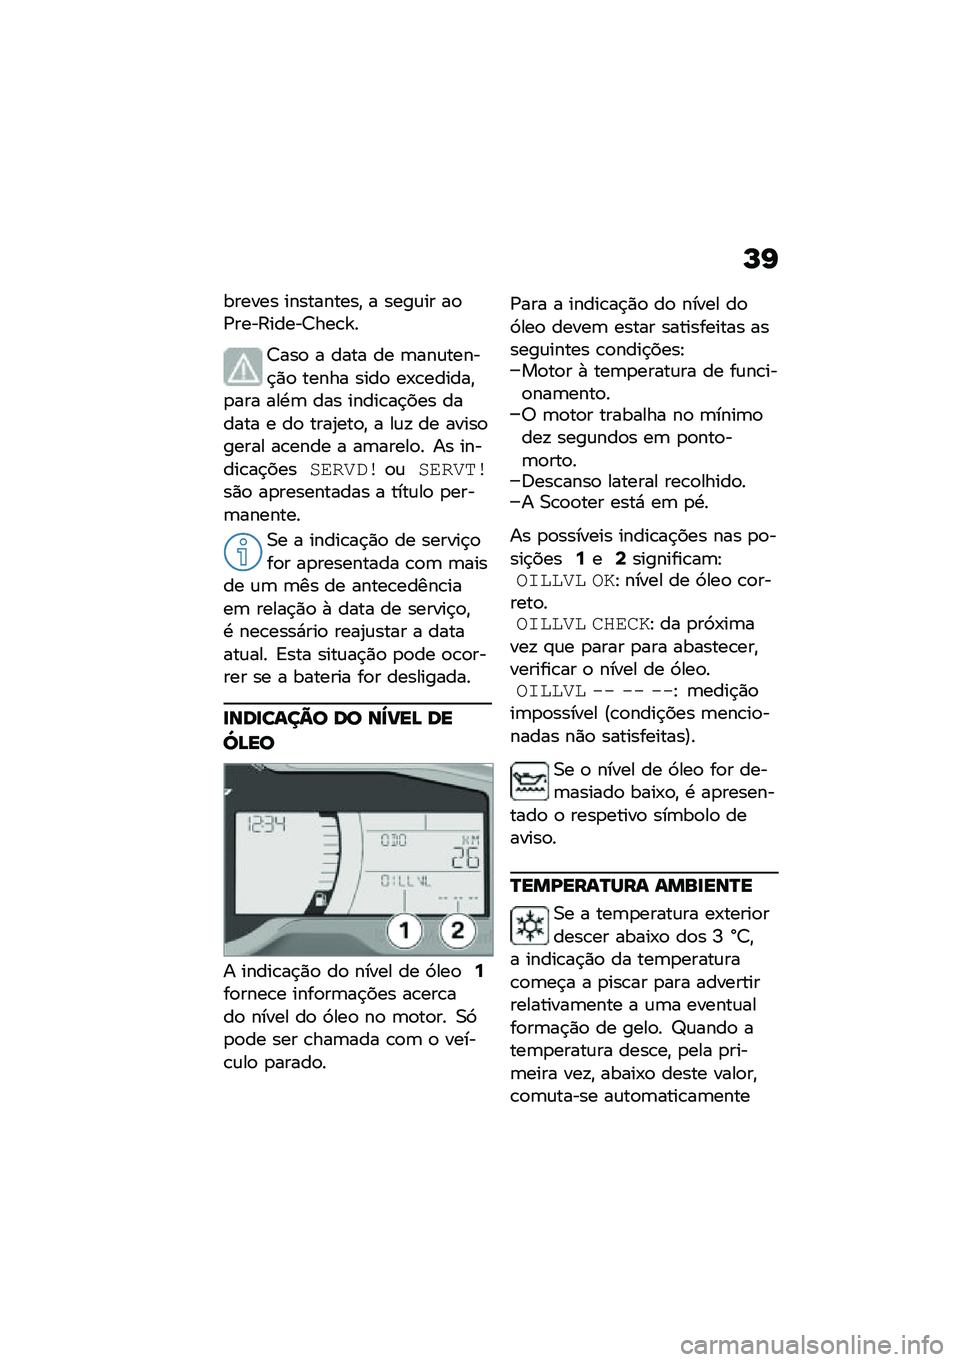 BMW MOTORRAD C 400 GT 2020  Manual do condutor (in Portuguese) �L�I
������ ����������" � ����\f�� ��
�/����?�����<���\b�^�
�<���
 � ���� �� �	���\f�����$�)�
 ����� ����
 ��-�\b������"�
��� ���.�	 �